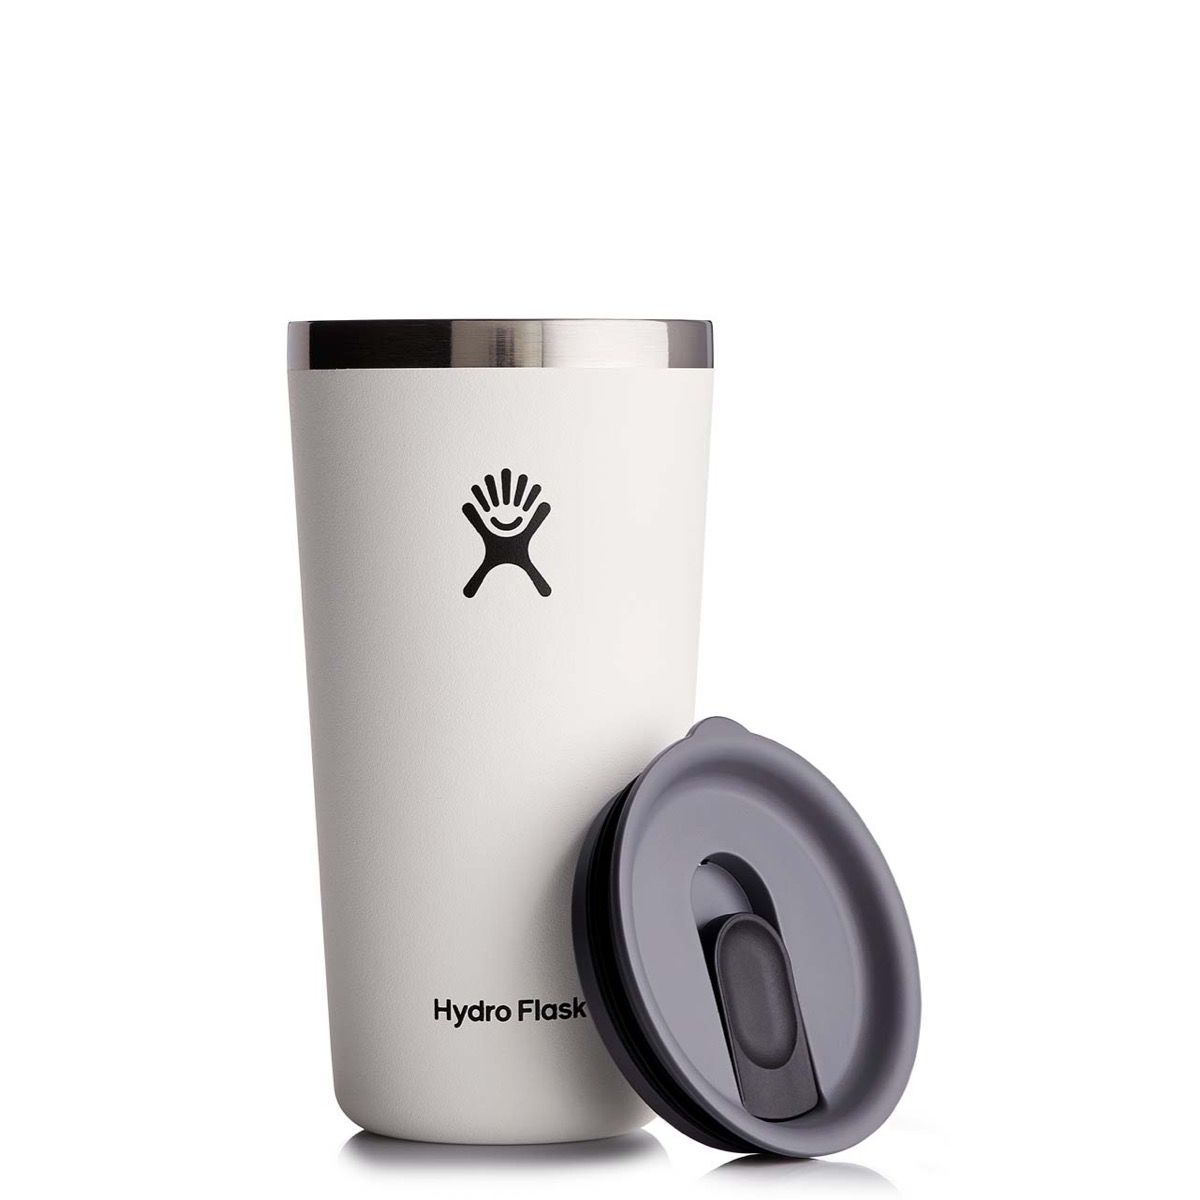 Hydro Flask All Around Tumbler 20 oz - Black – Totem Brand Co.